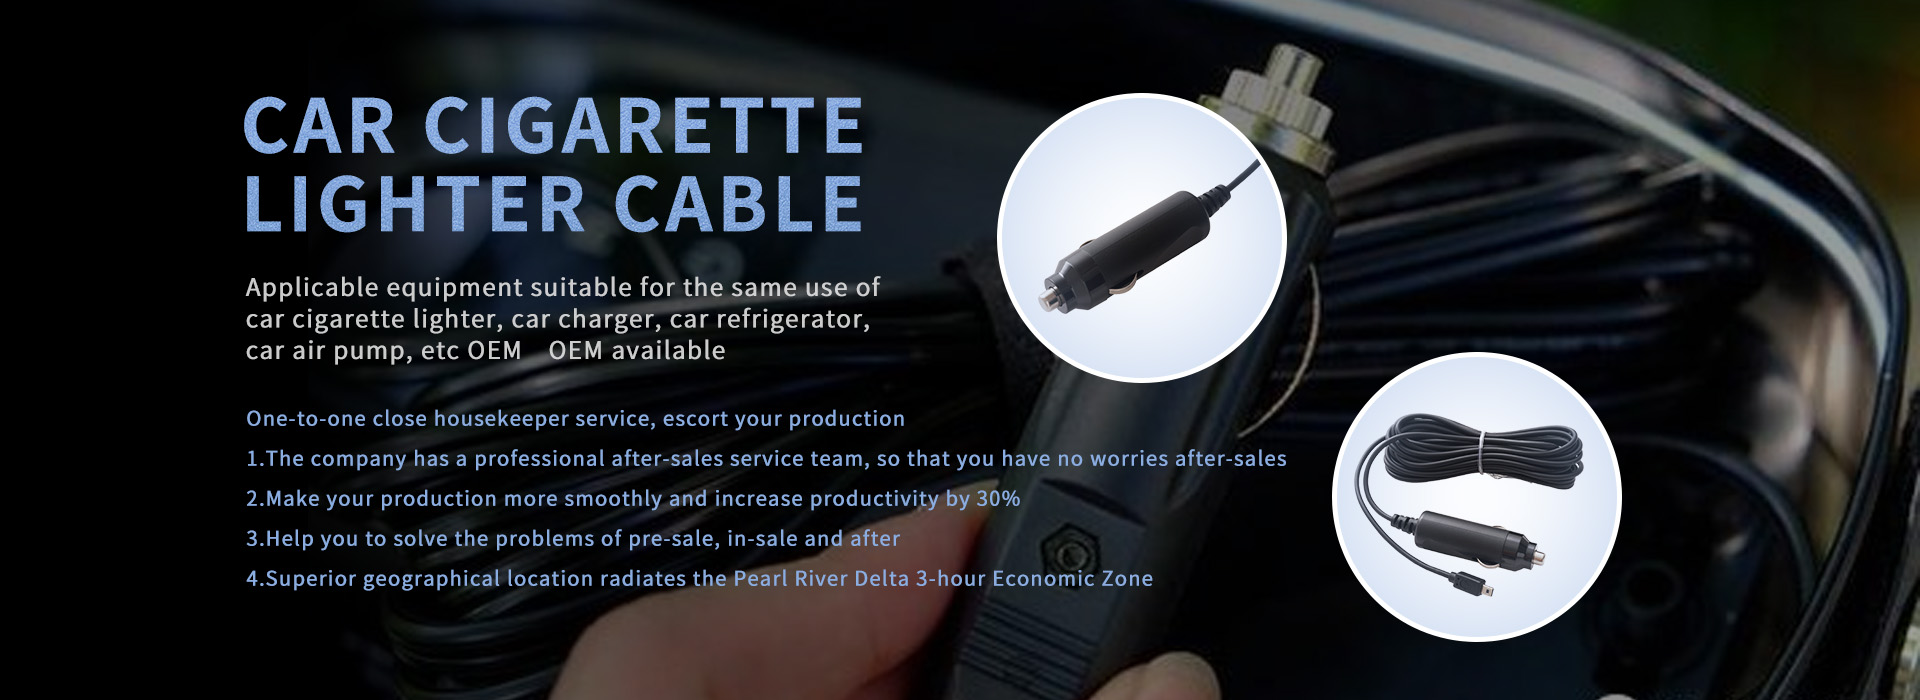 Car cigarette lighter cable